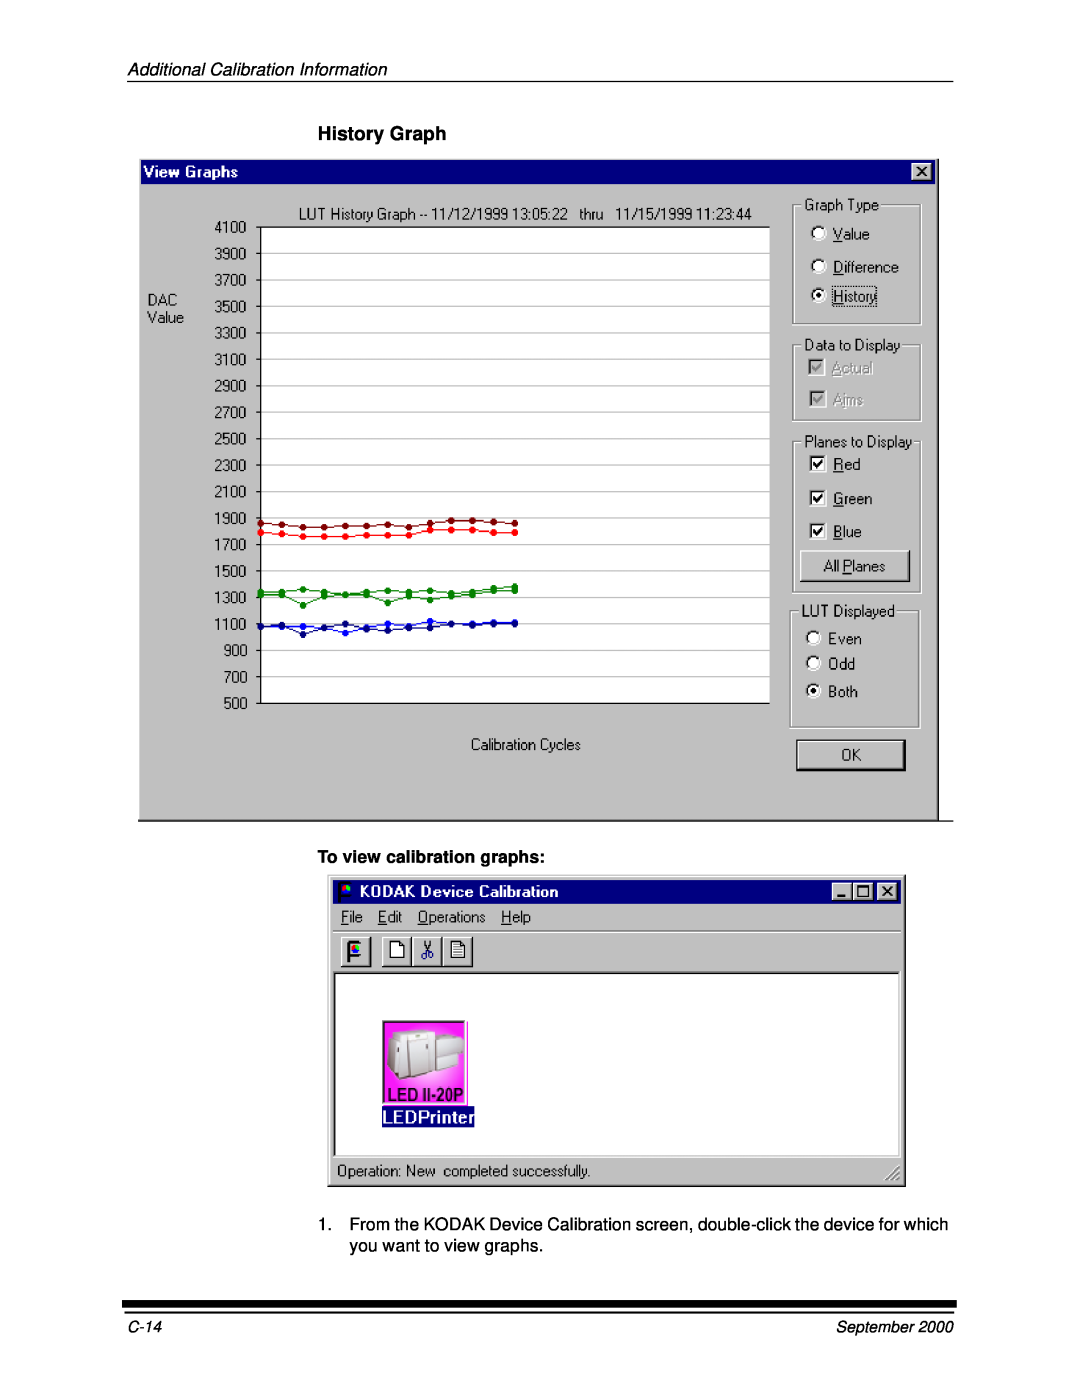 Kodak 20R manual History Graph, Additional Calibration Information, To view calibration graphs, C-14, September 